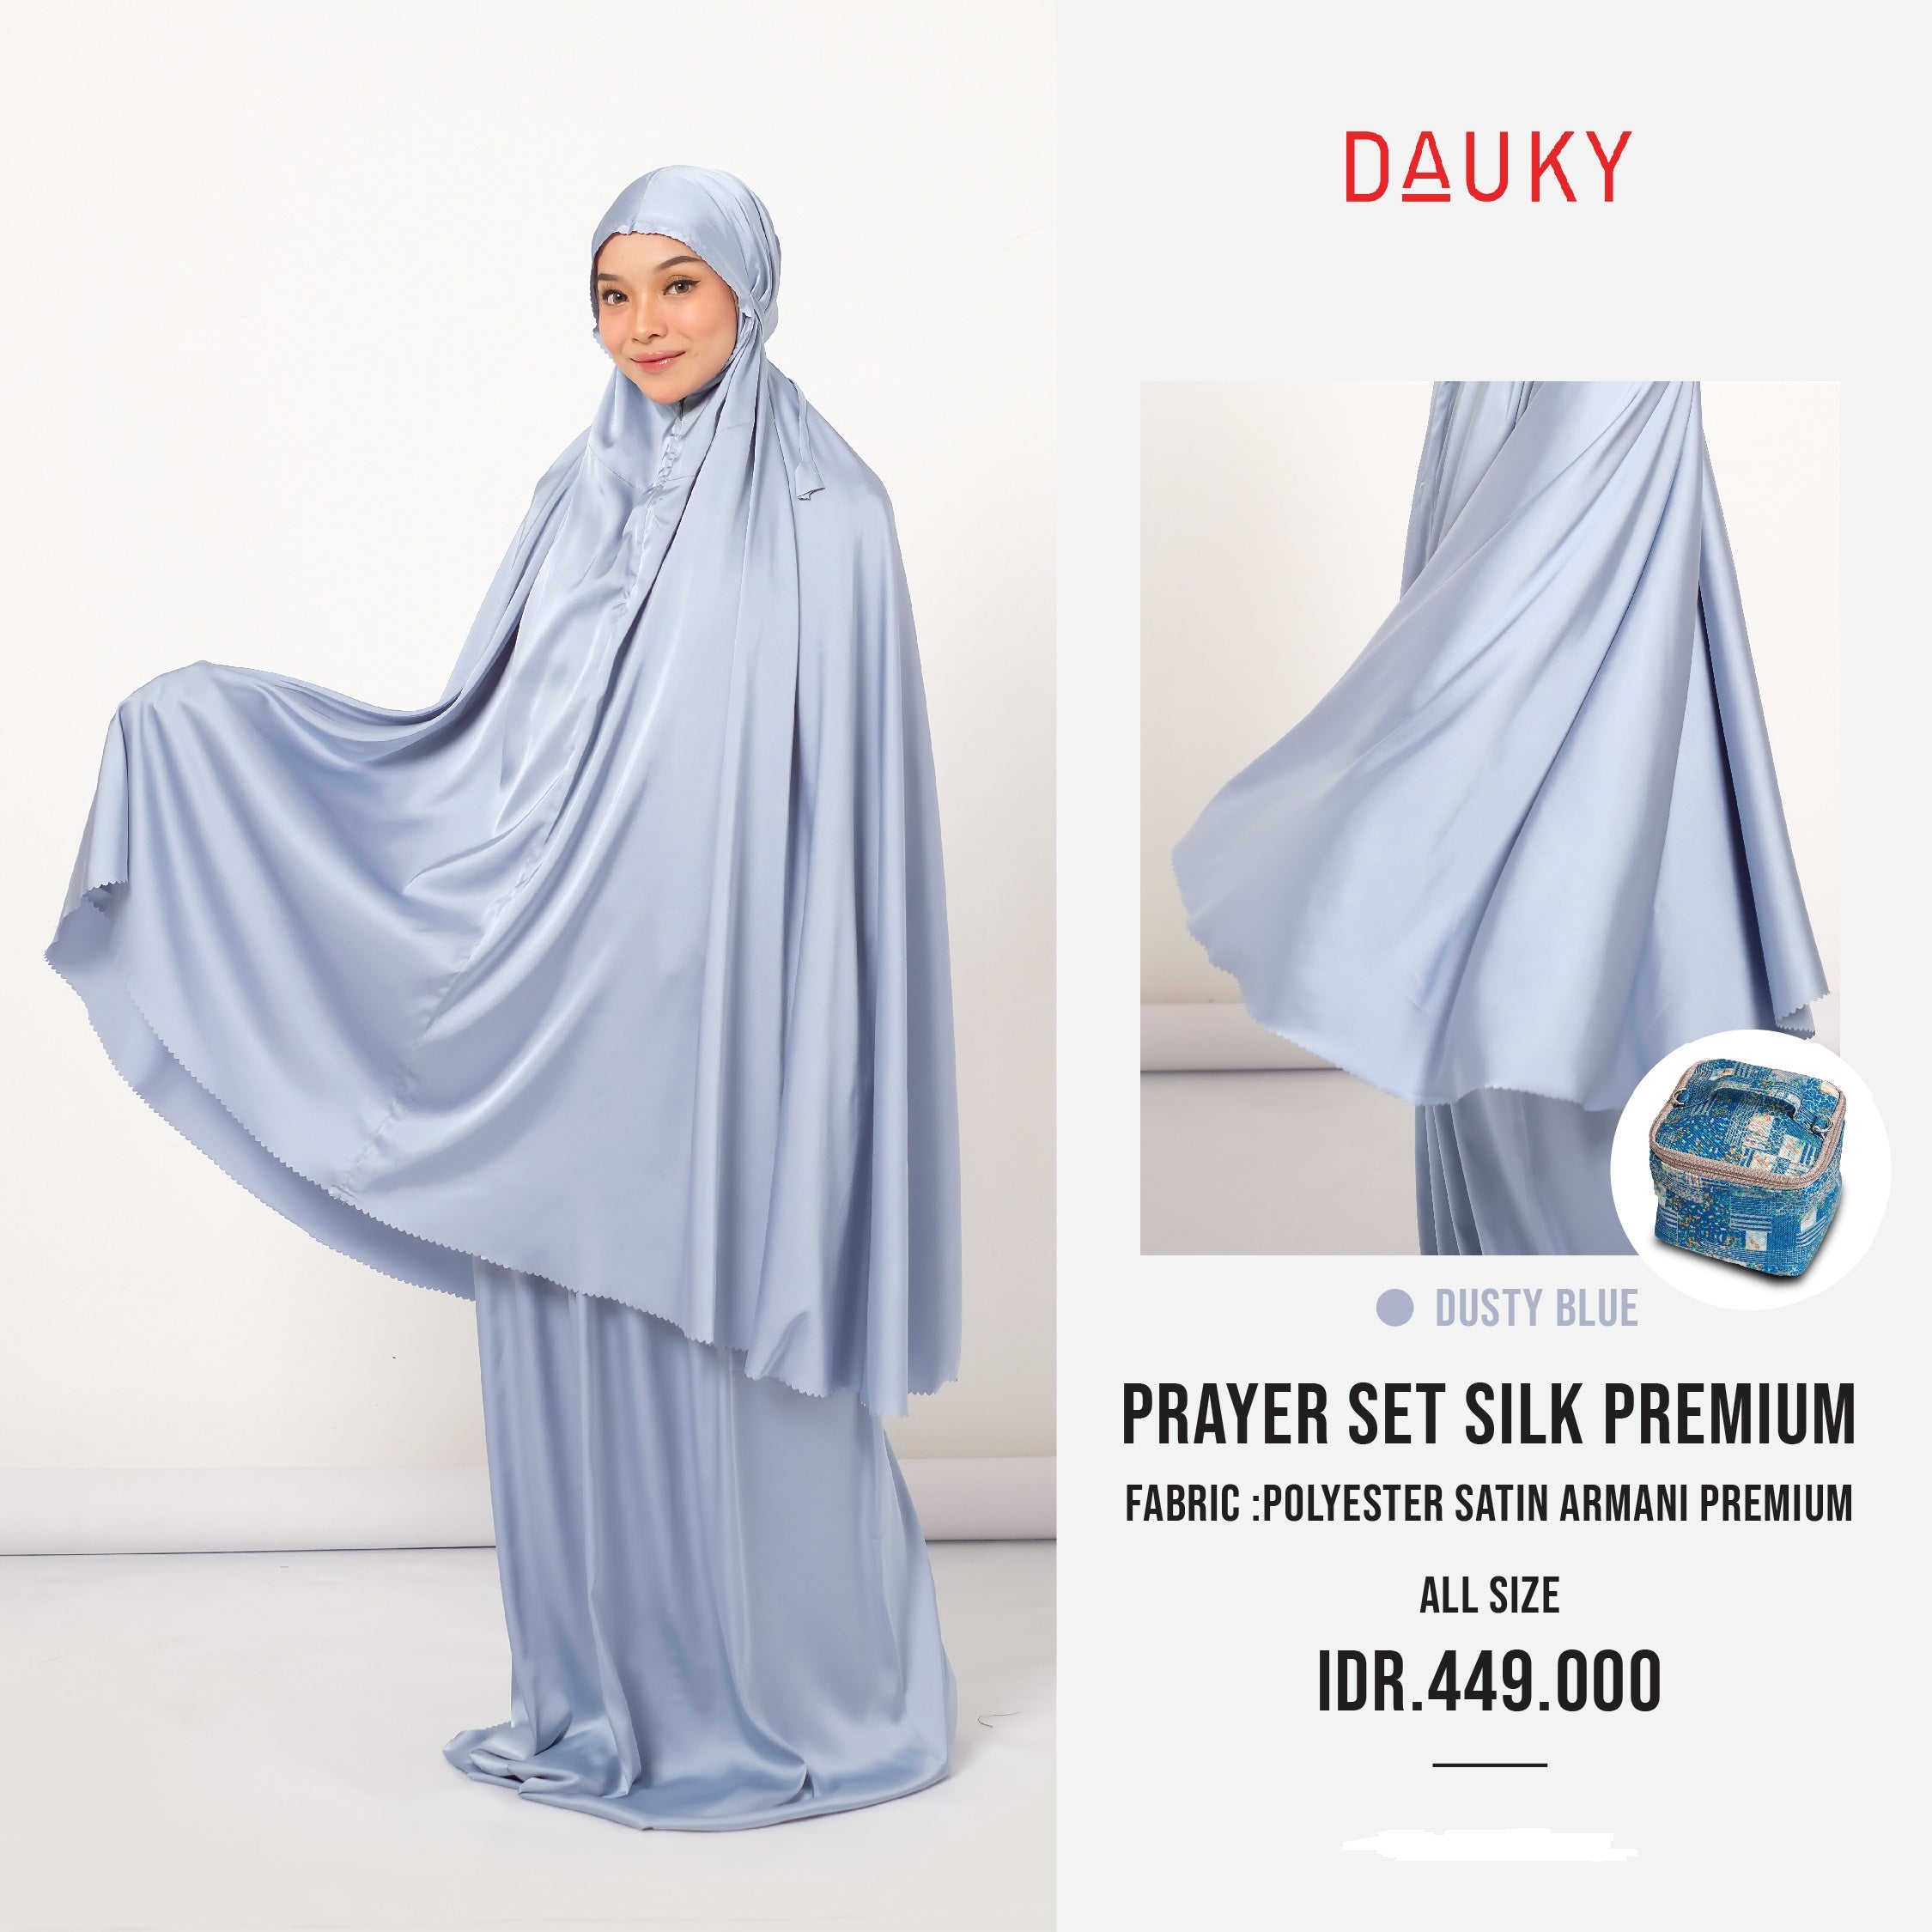 Dauky Mukena Prayer Set Silk Premium - Dusty Blue